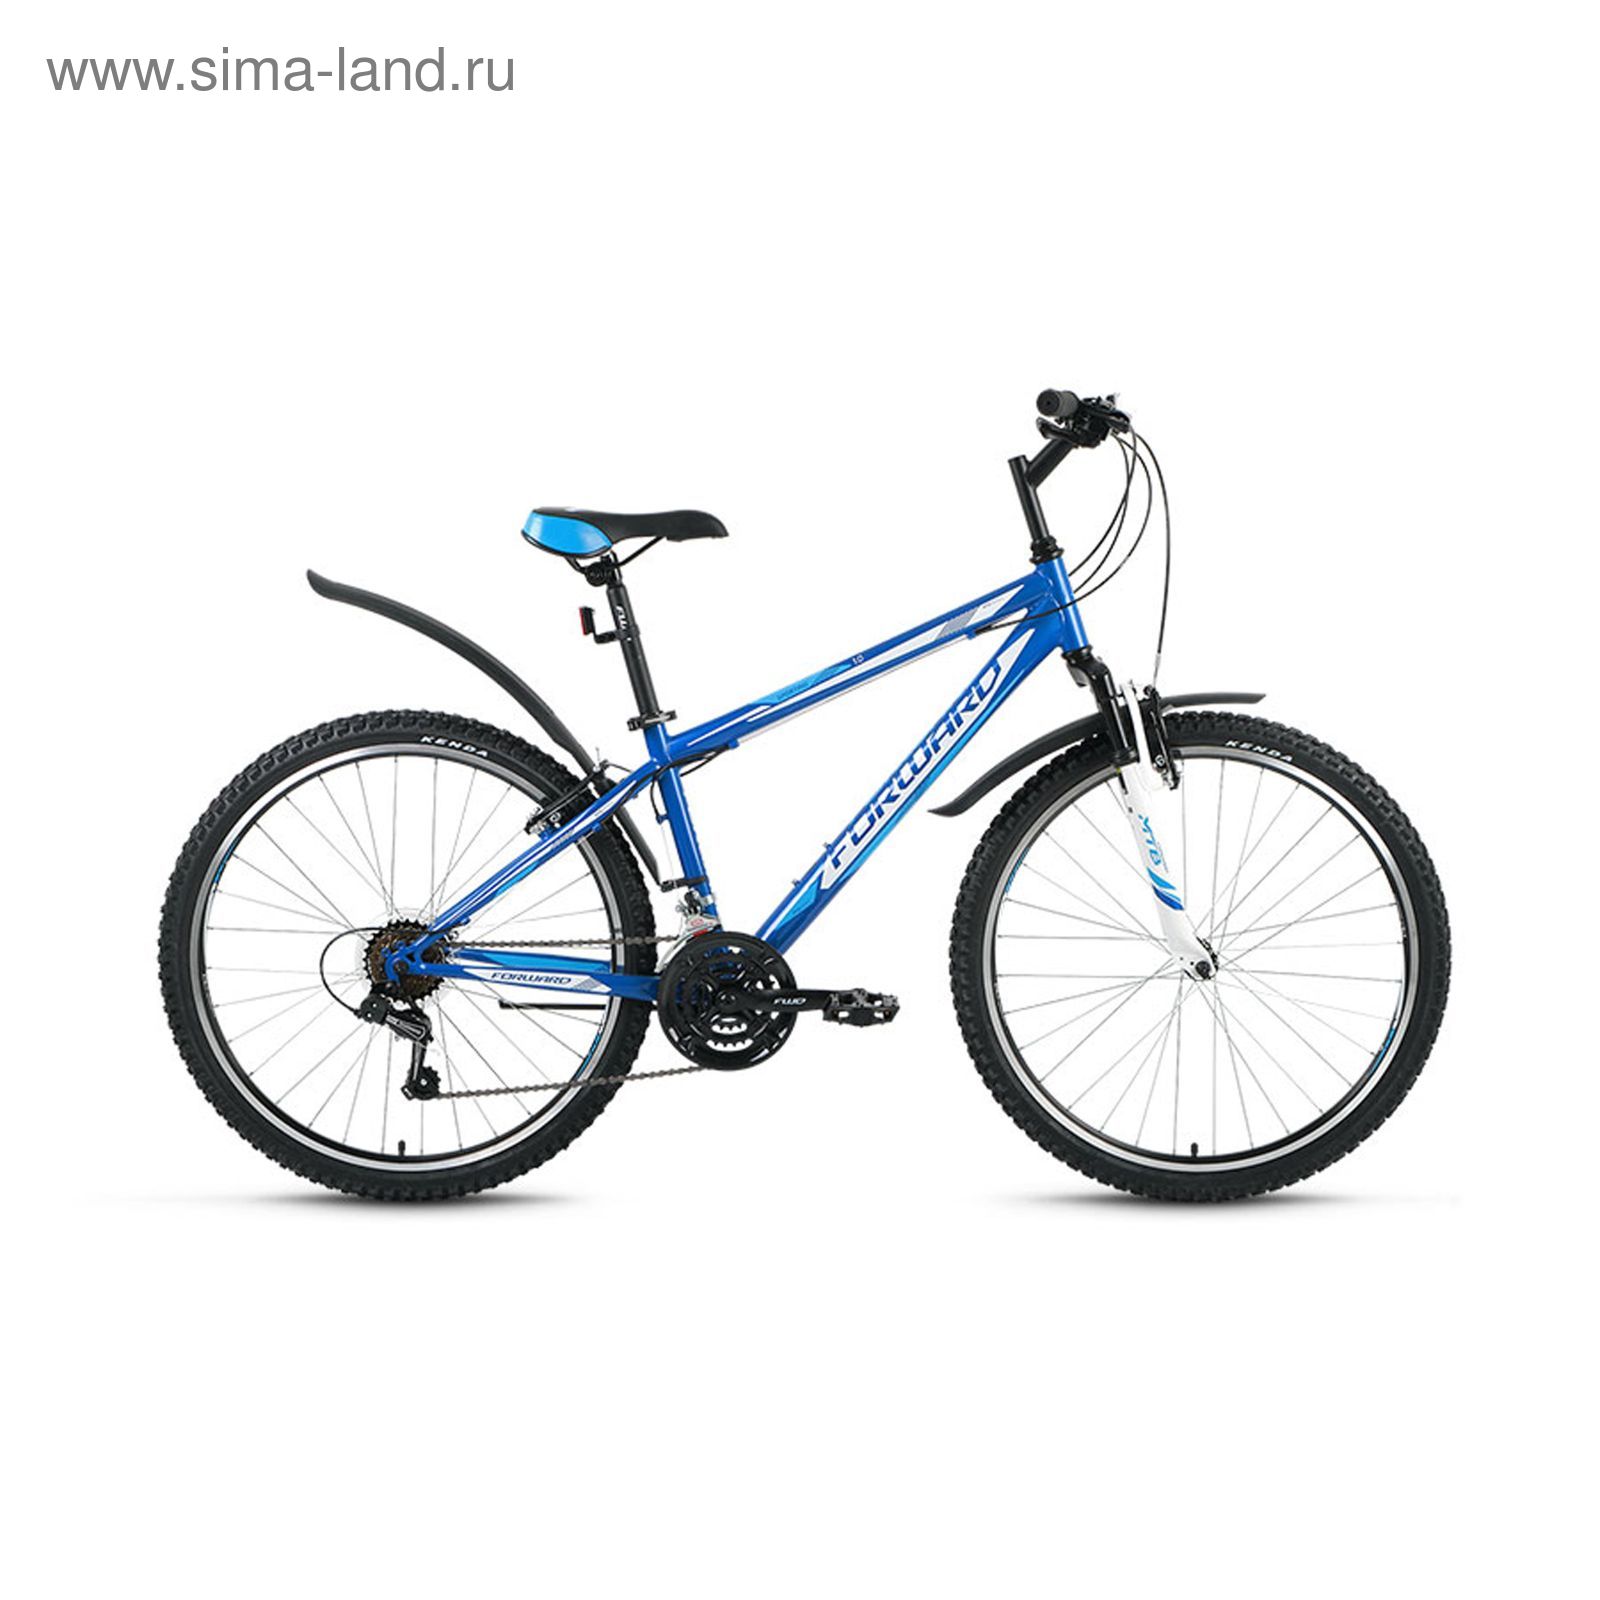 Велосипед 26" Forward Sporting 1.0, 2017, цвет синий, размер 17"